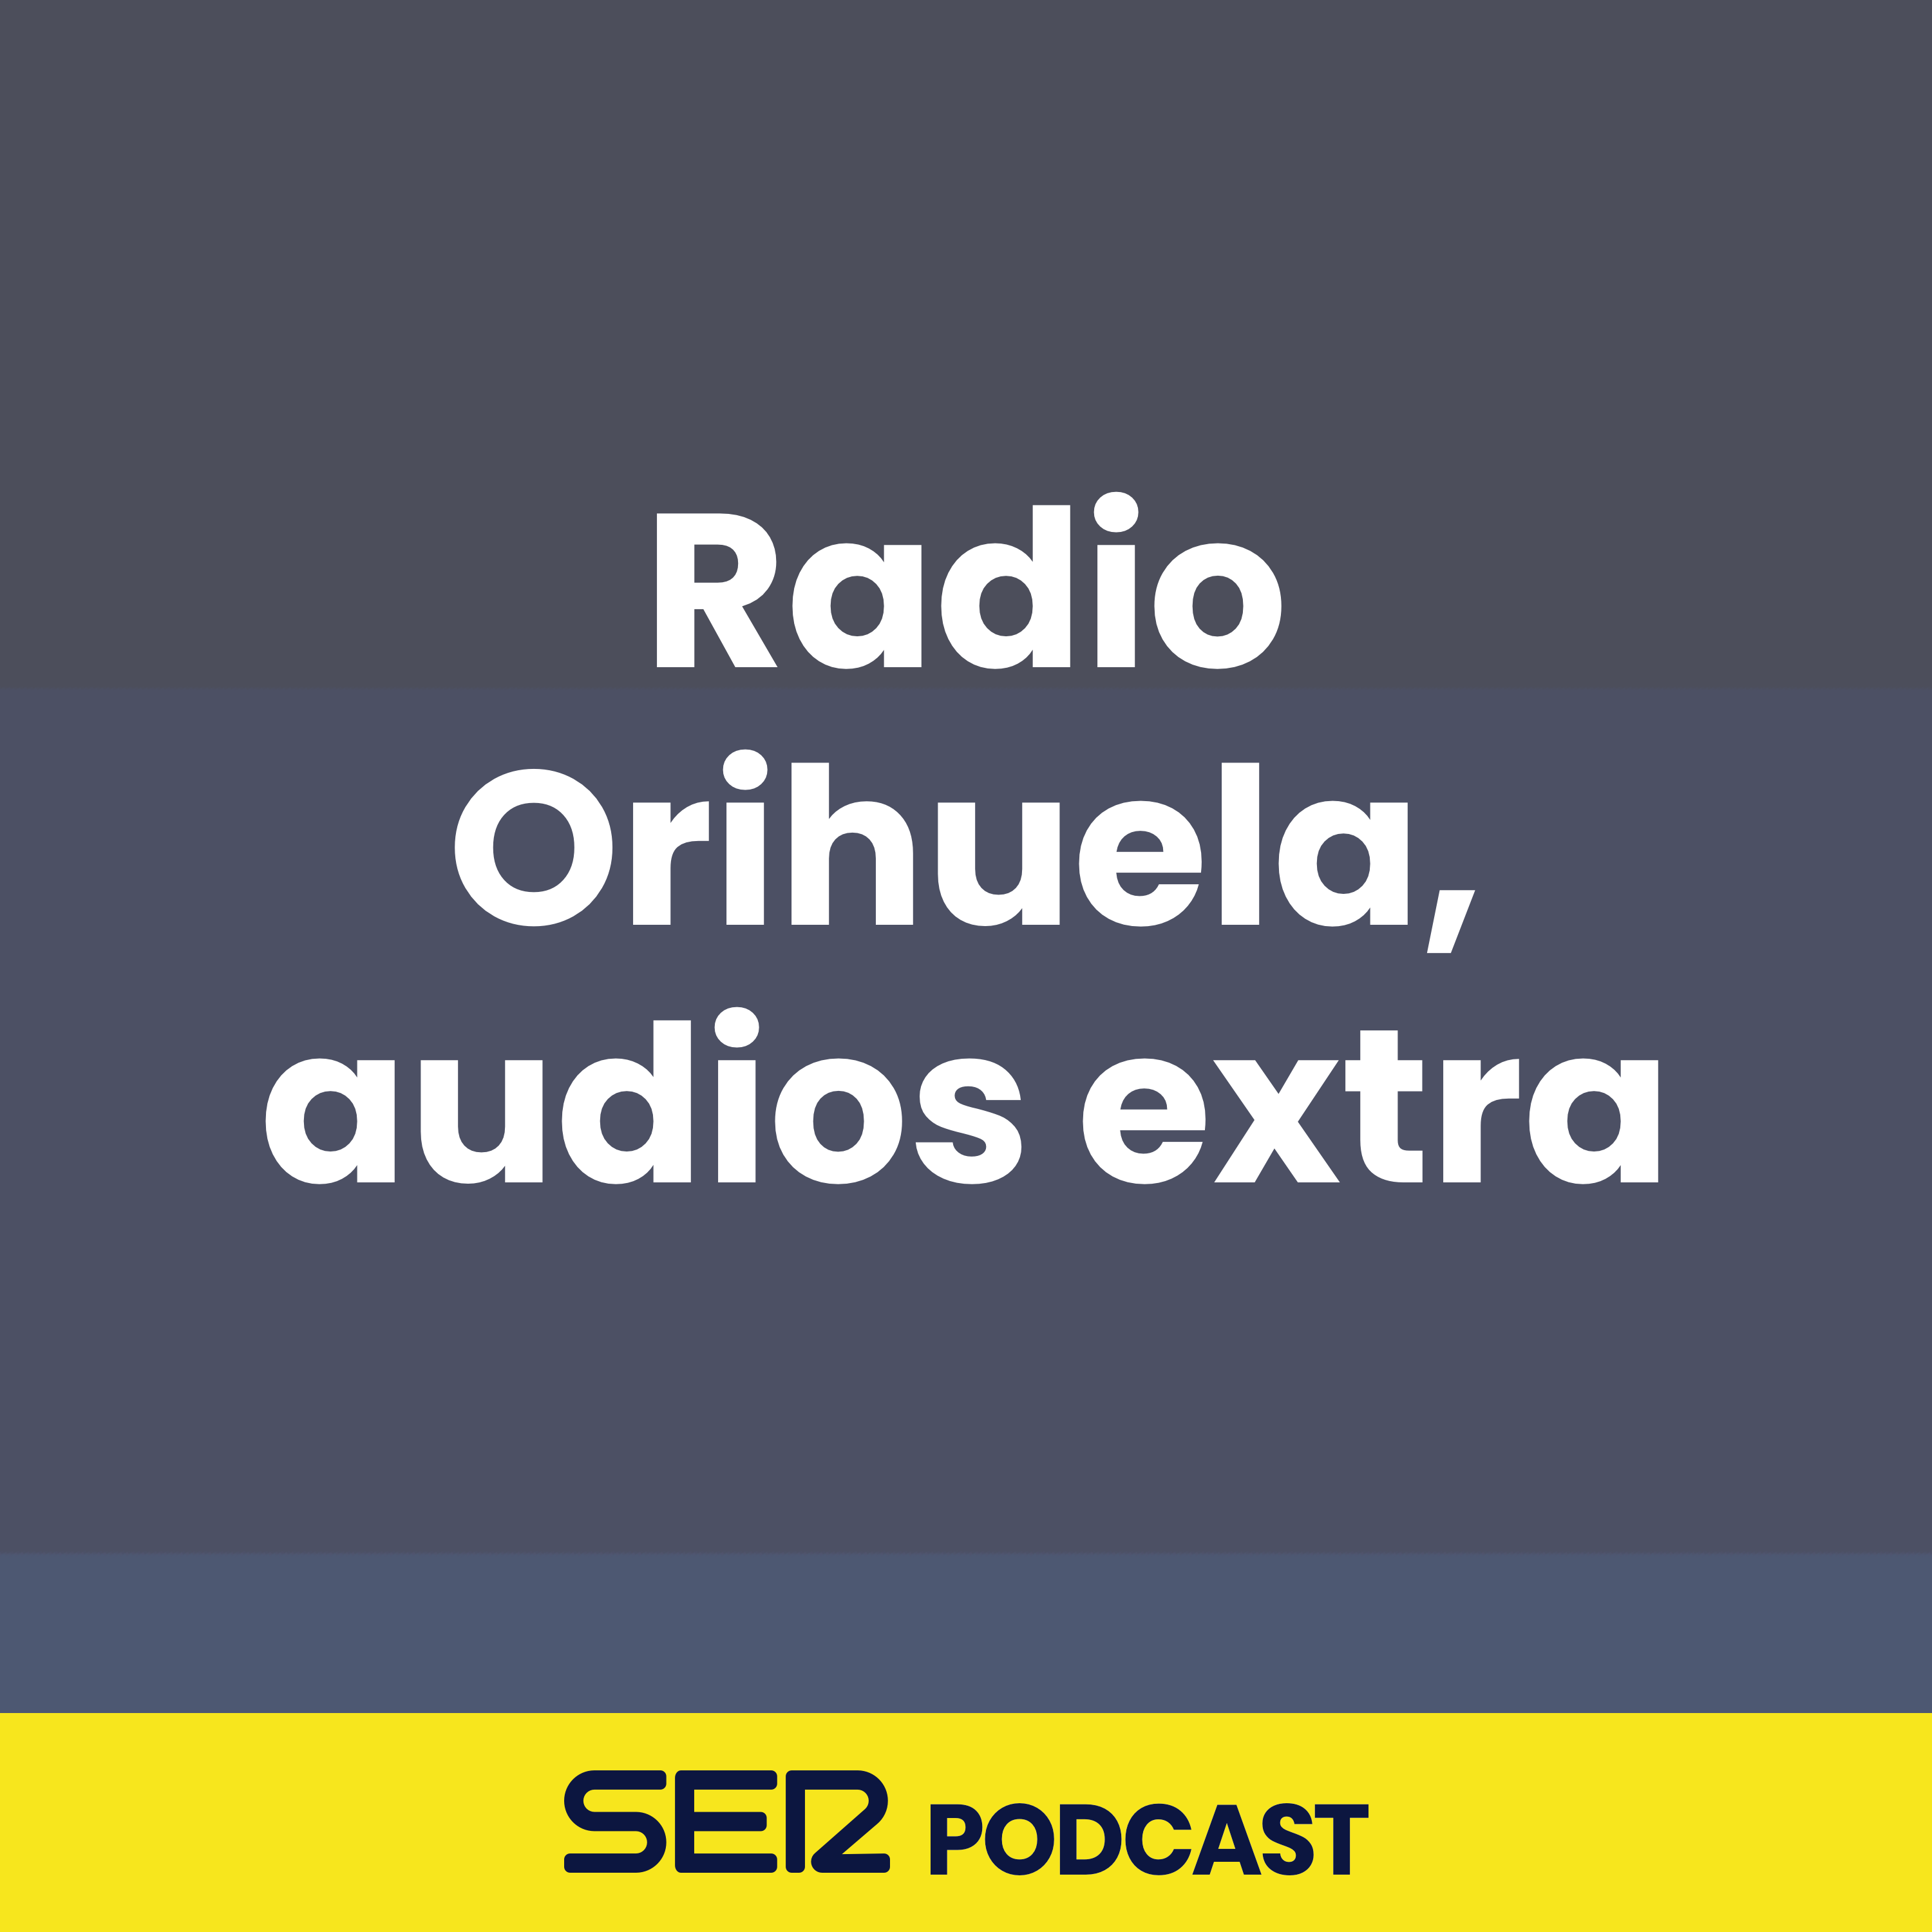 Radio Orihuela, audios extra